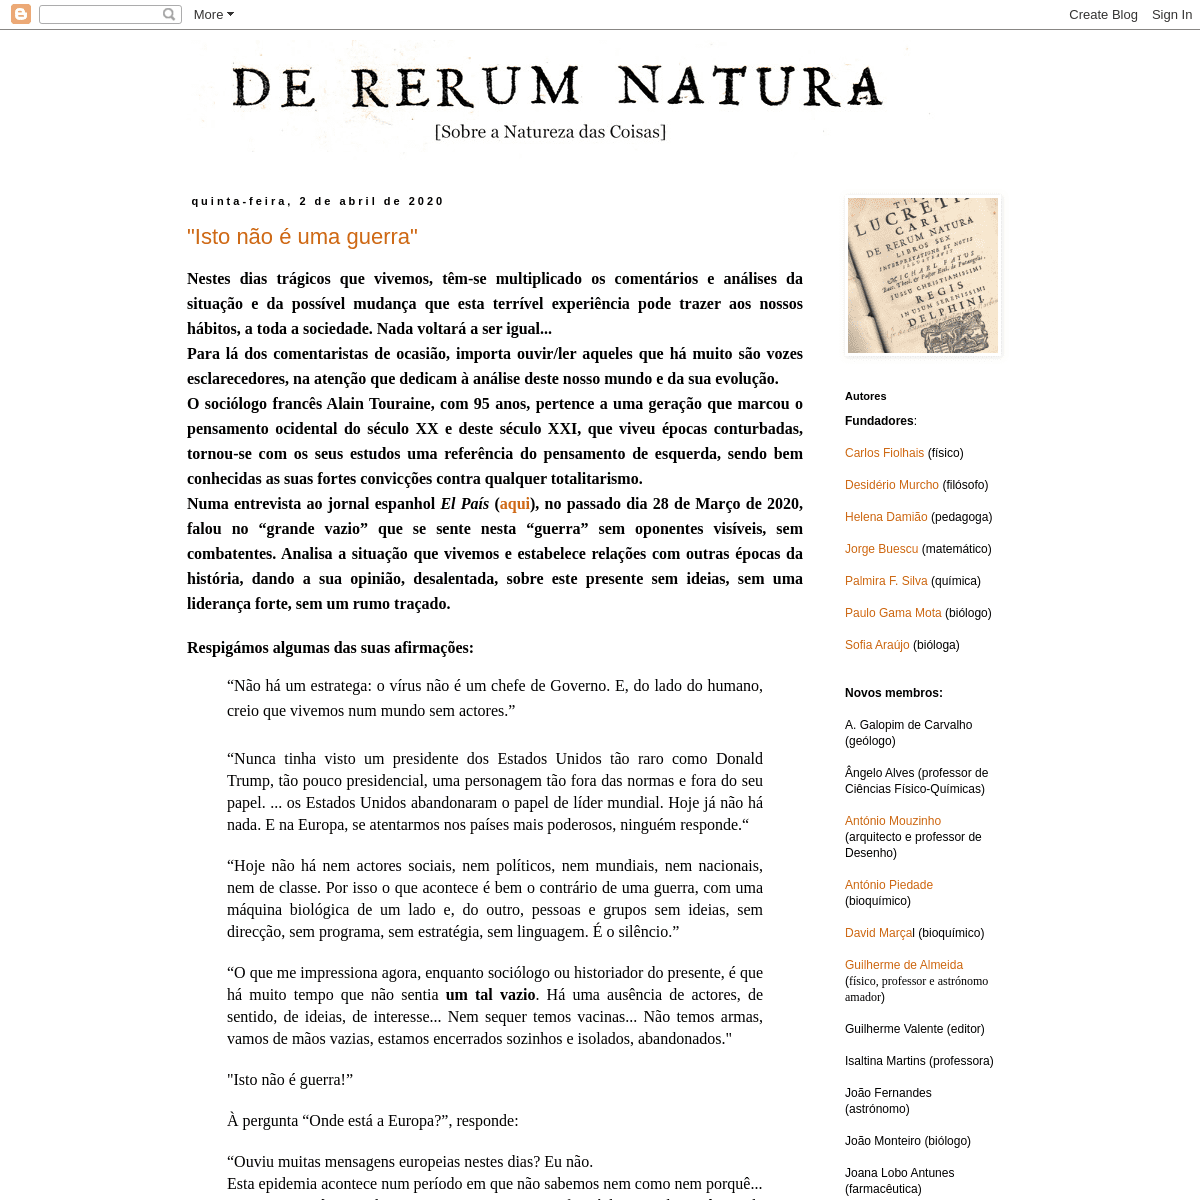 A complete backup of dererummundi.blogspot.com